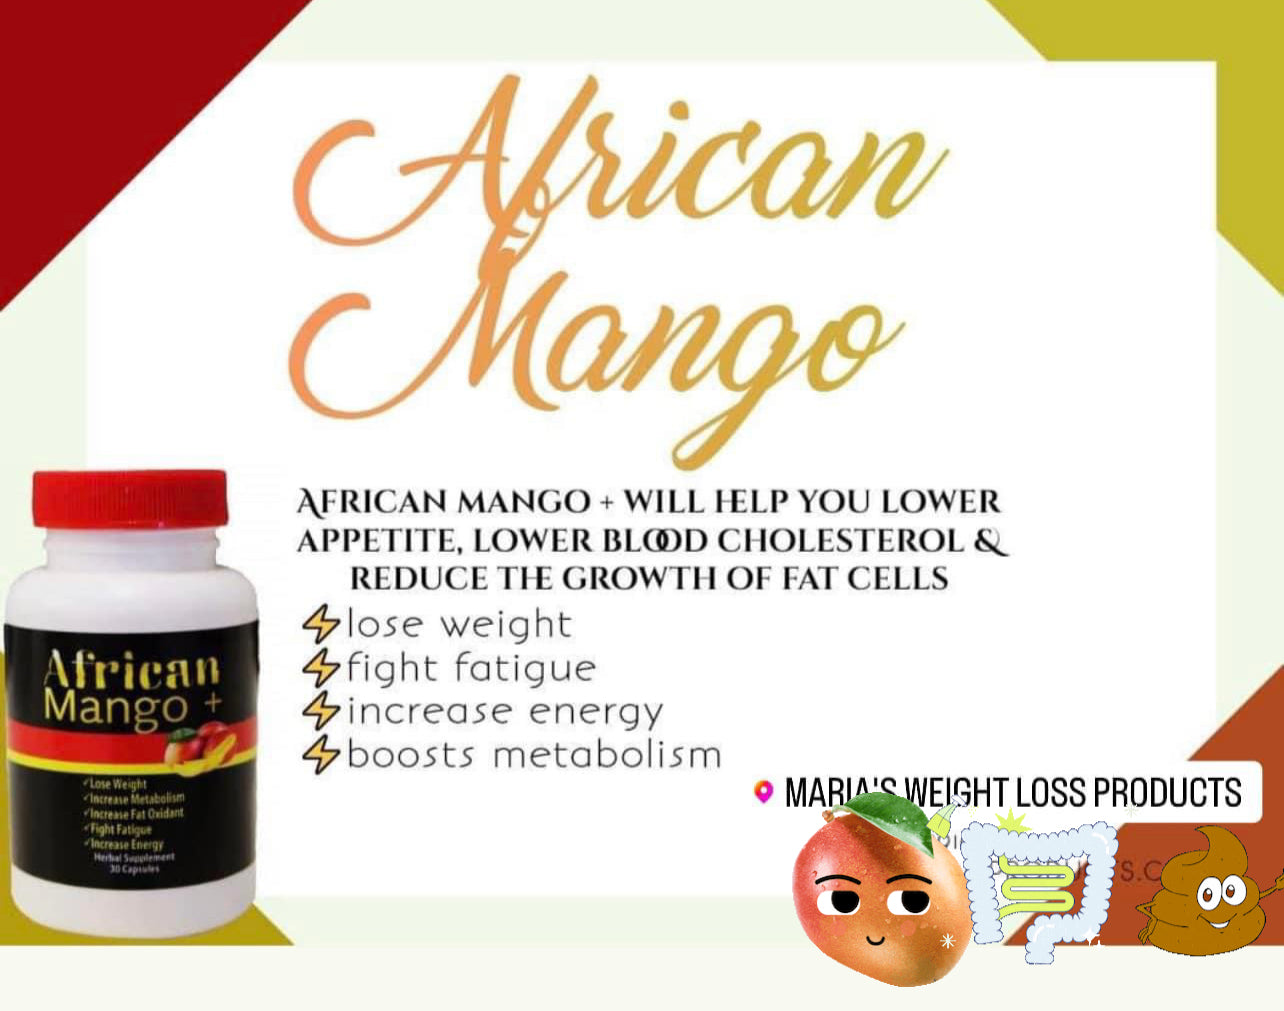 African mango +